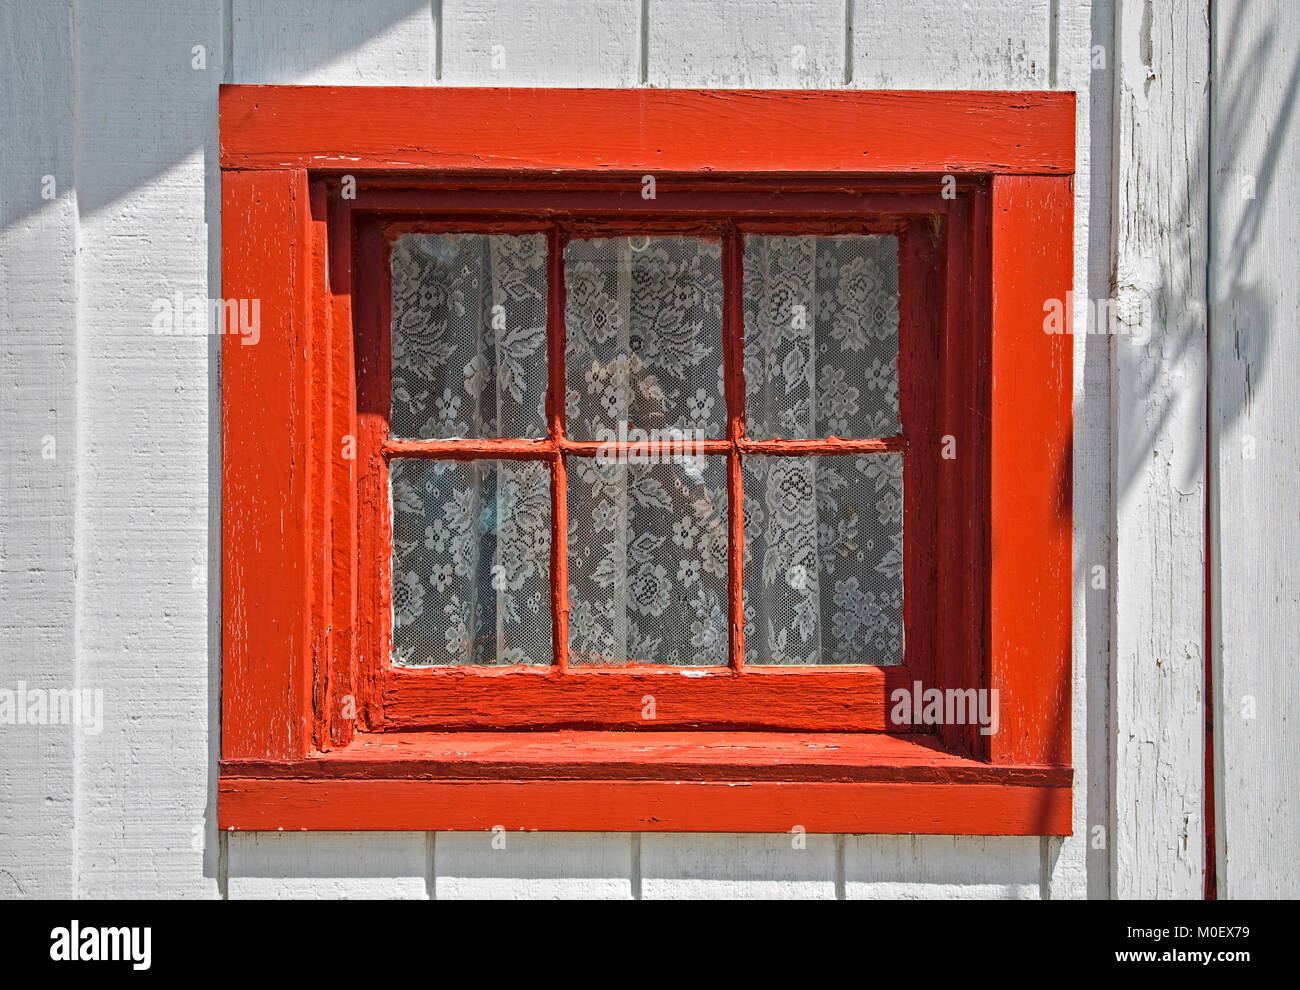 Red Boathouse Row Fenster mit einer Spitze Vorhang, Arapiraca, Upstate New York, USA, historische Canandaigua City Pier Boathouse Row, Finger Lakes Stockfoto